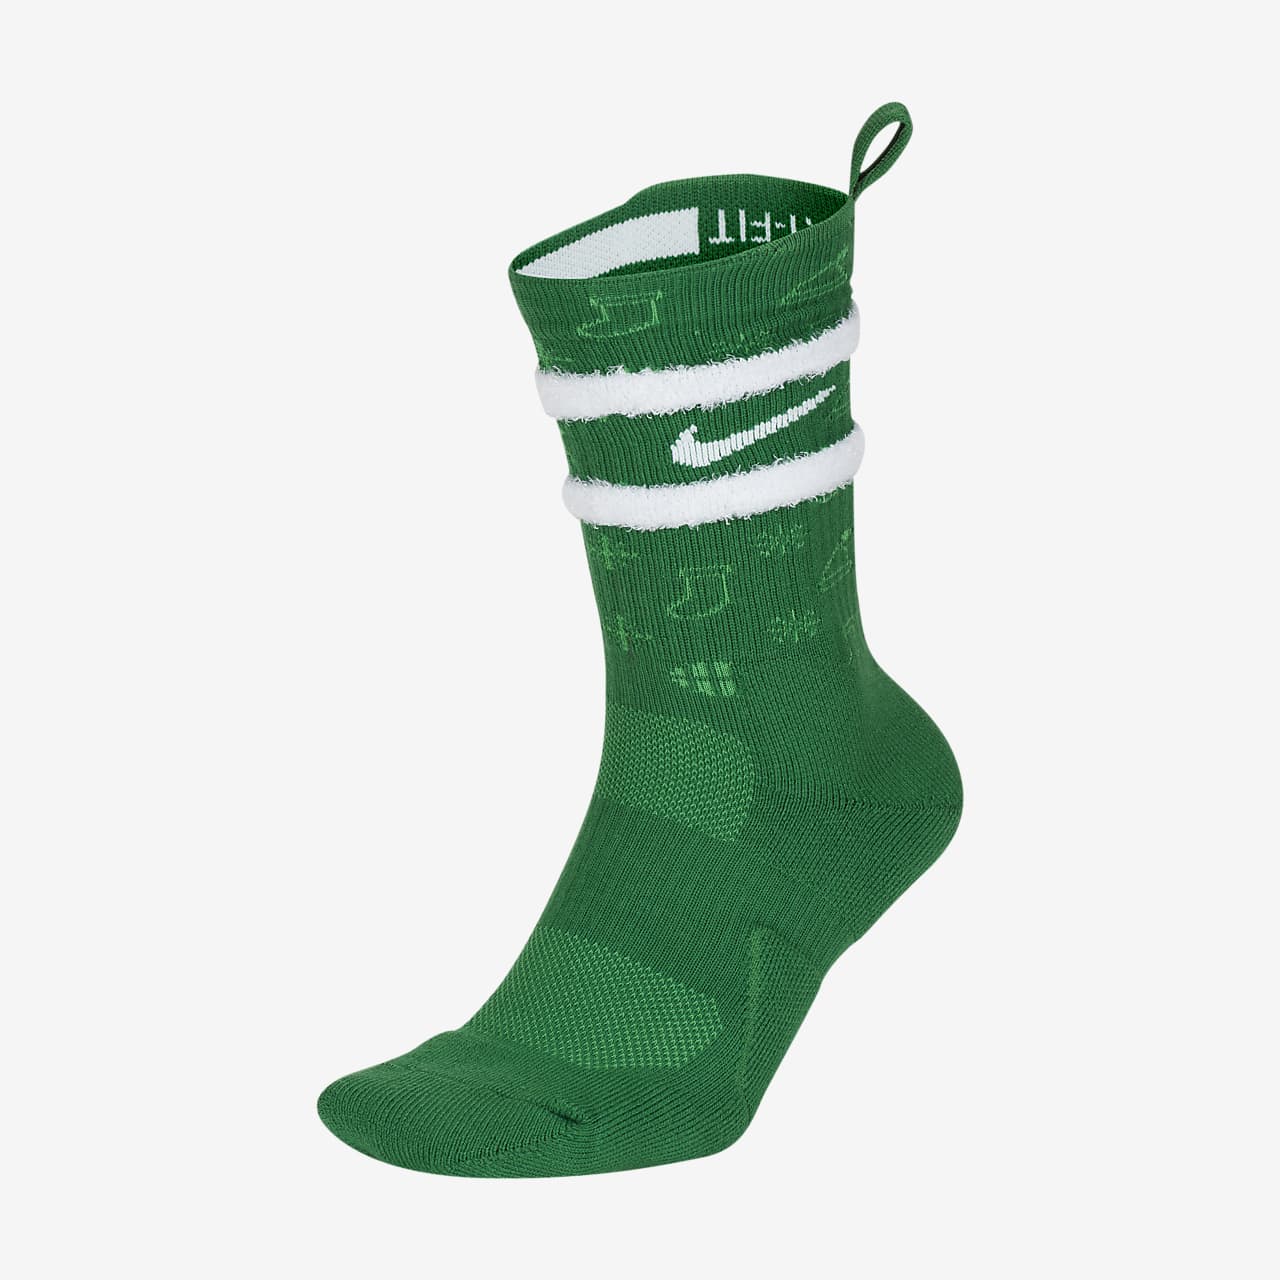 nike elite holiday socks